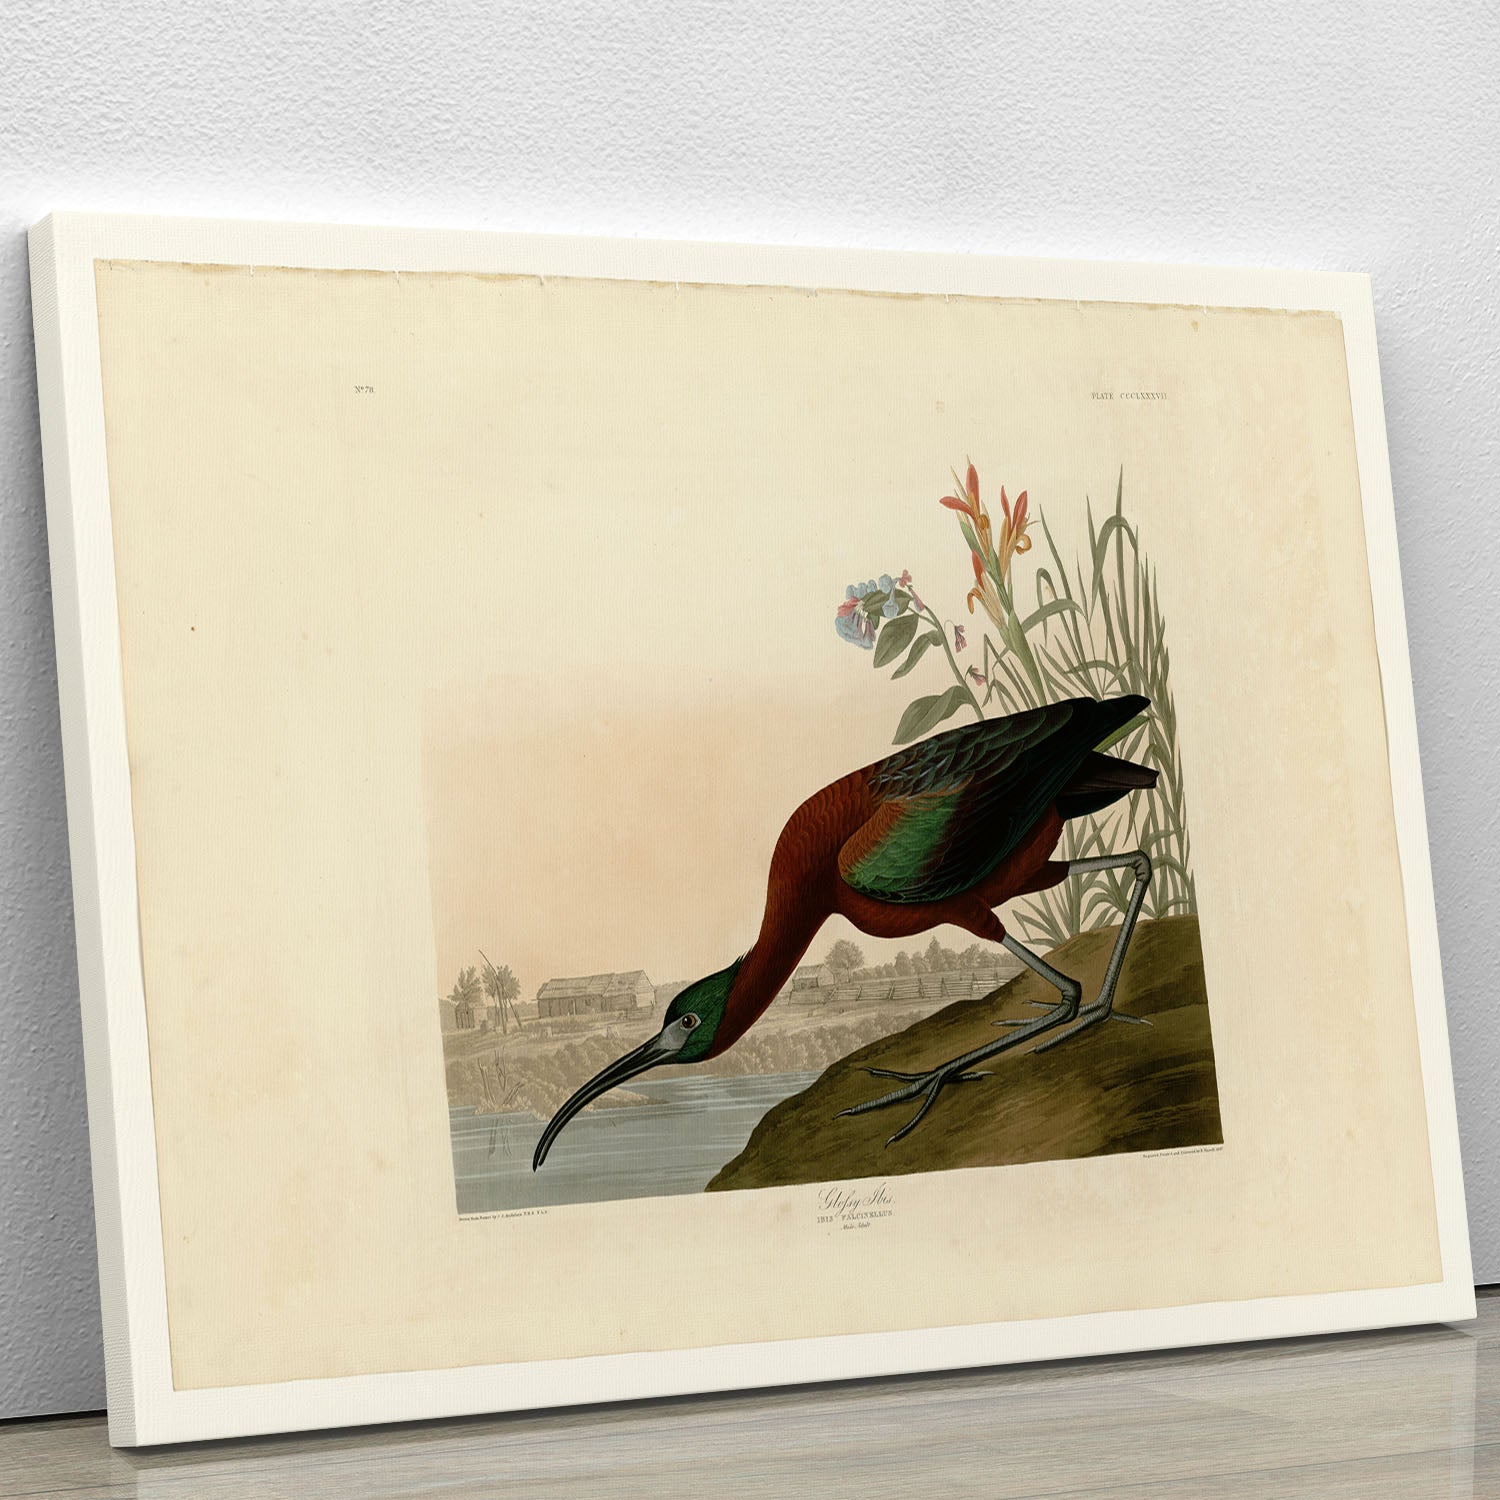 Glossy Ibis by Audubon Canvas Print or Poster - Canvas Art Rocks - 1